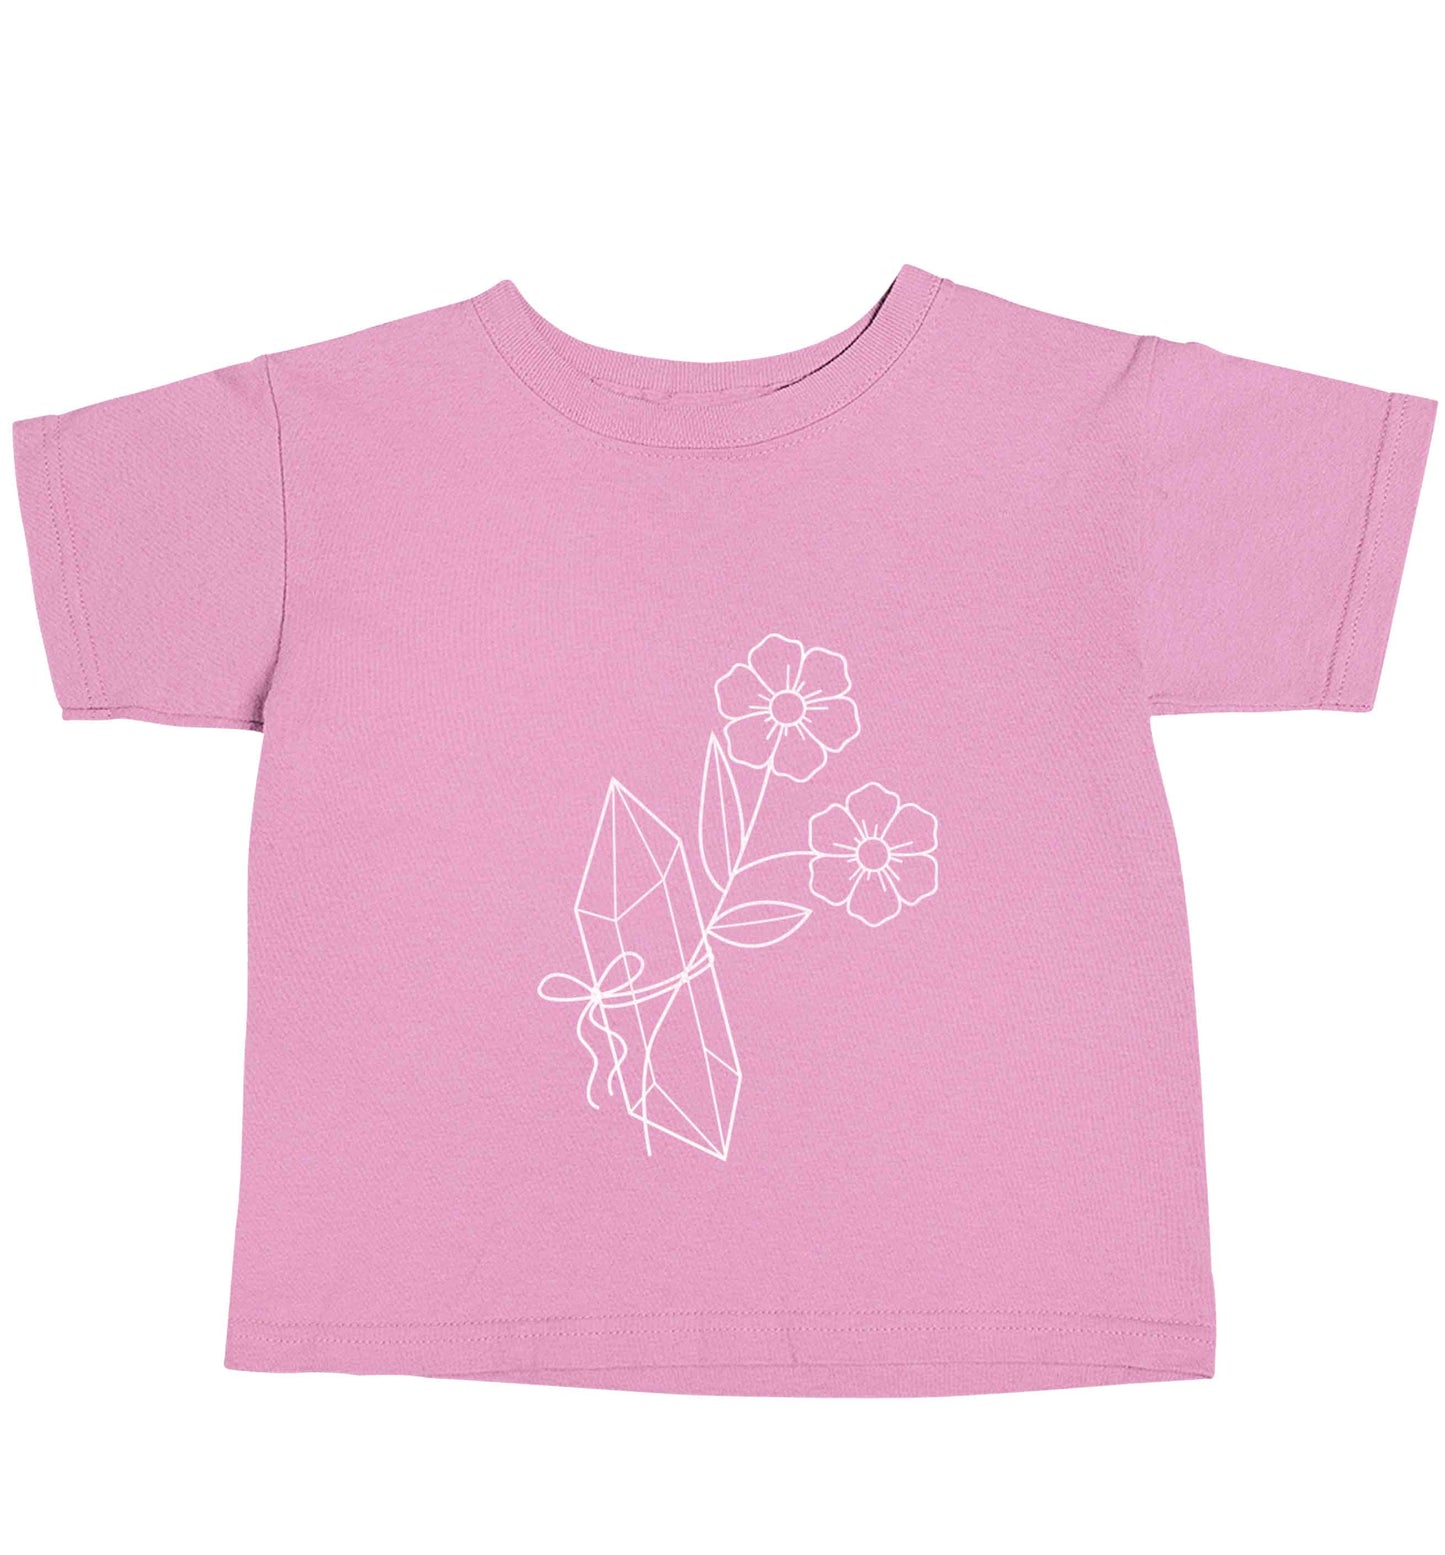 Crystal flower illustration light pink baby toddler Tshirt 2 Years